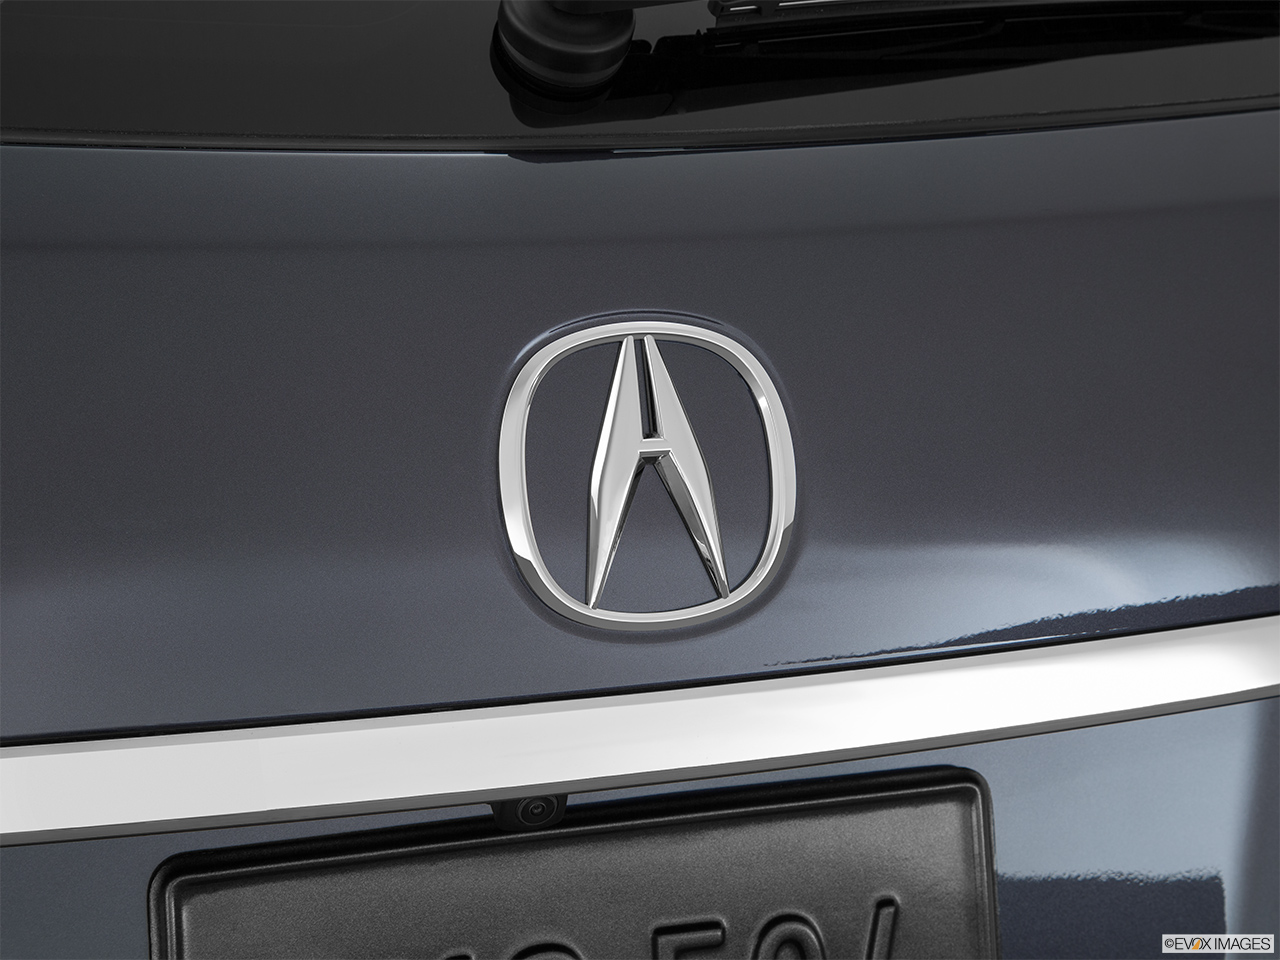 2016 Acura RDX Base Rear manufacture badge/emblem 